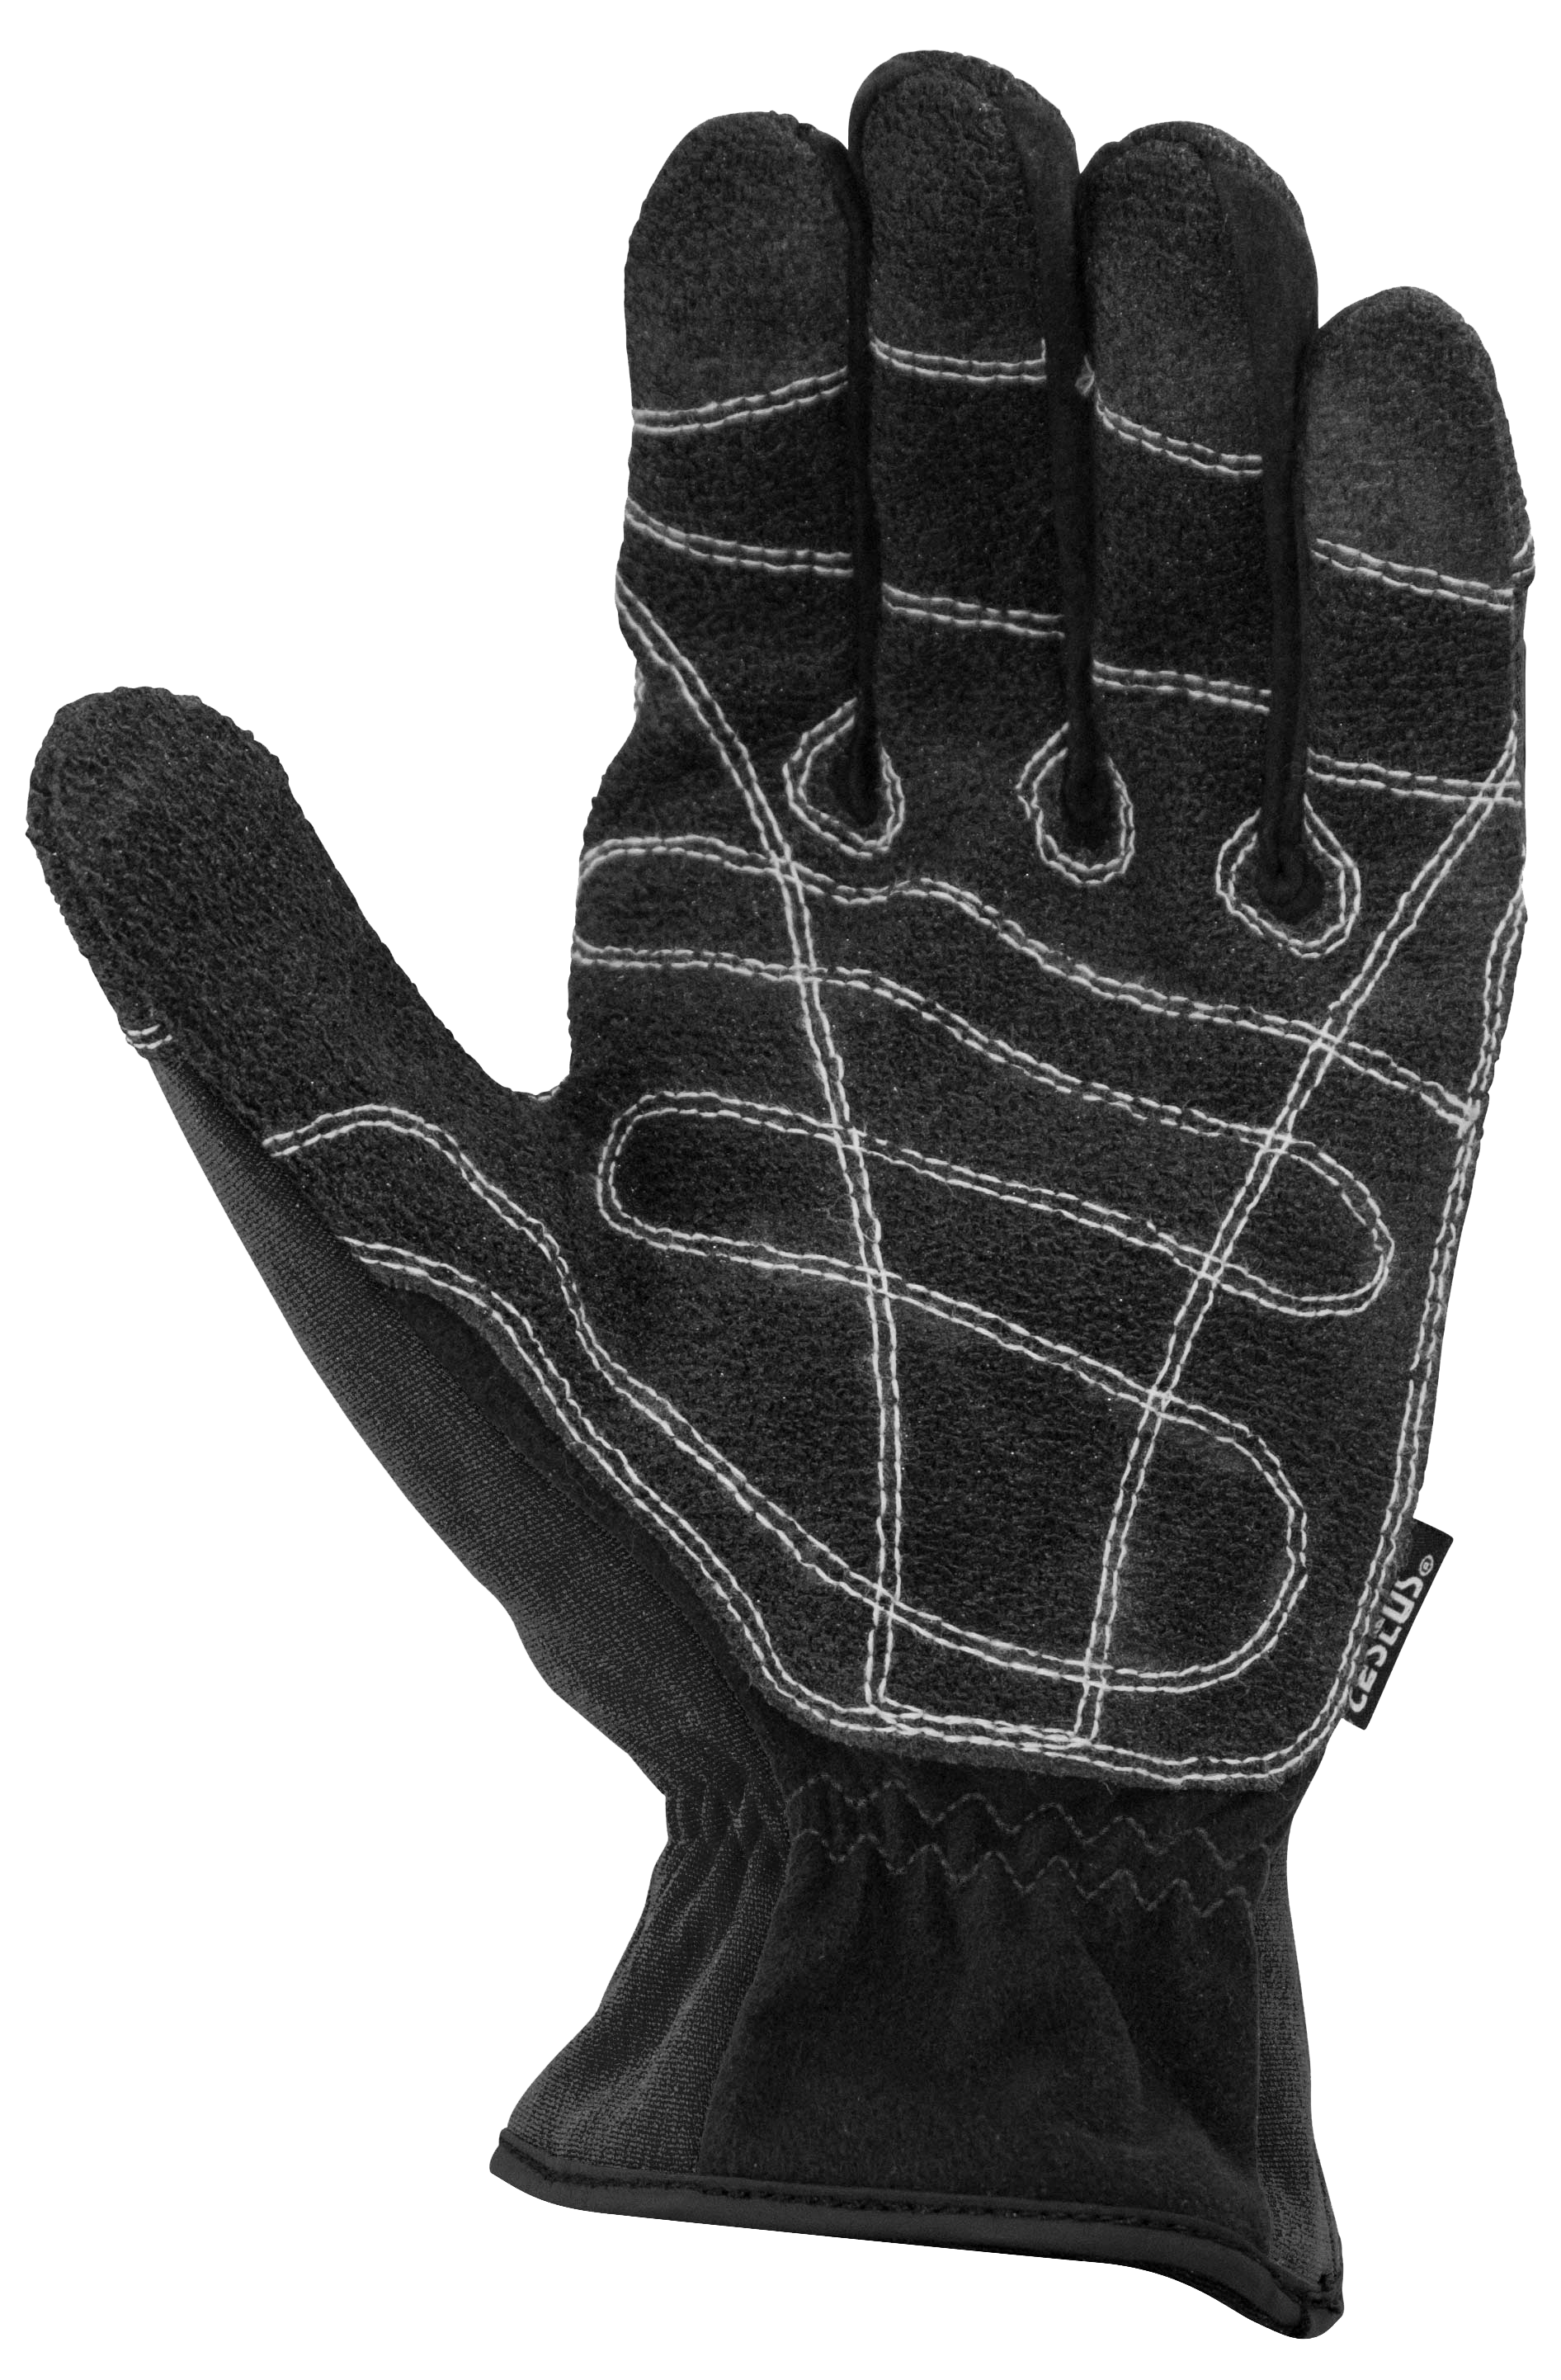 Cestus Armored Gloves impact protection handling HM Handler #4021 #4022 